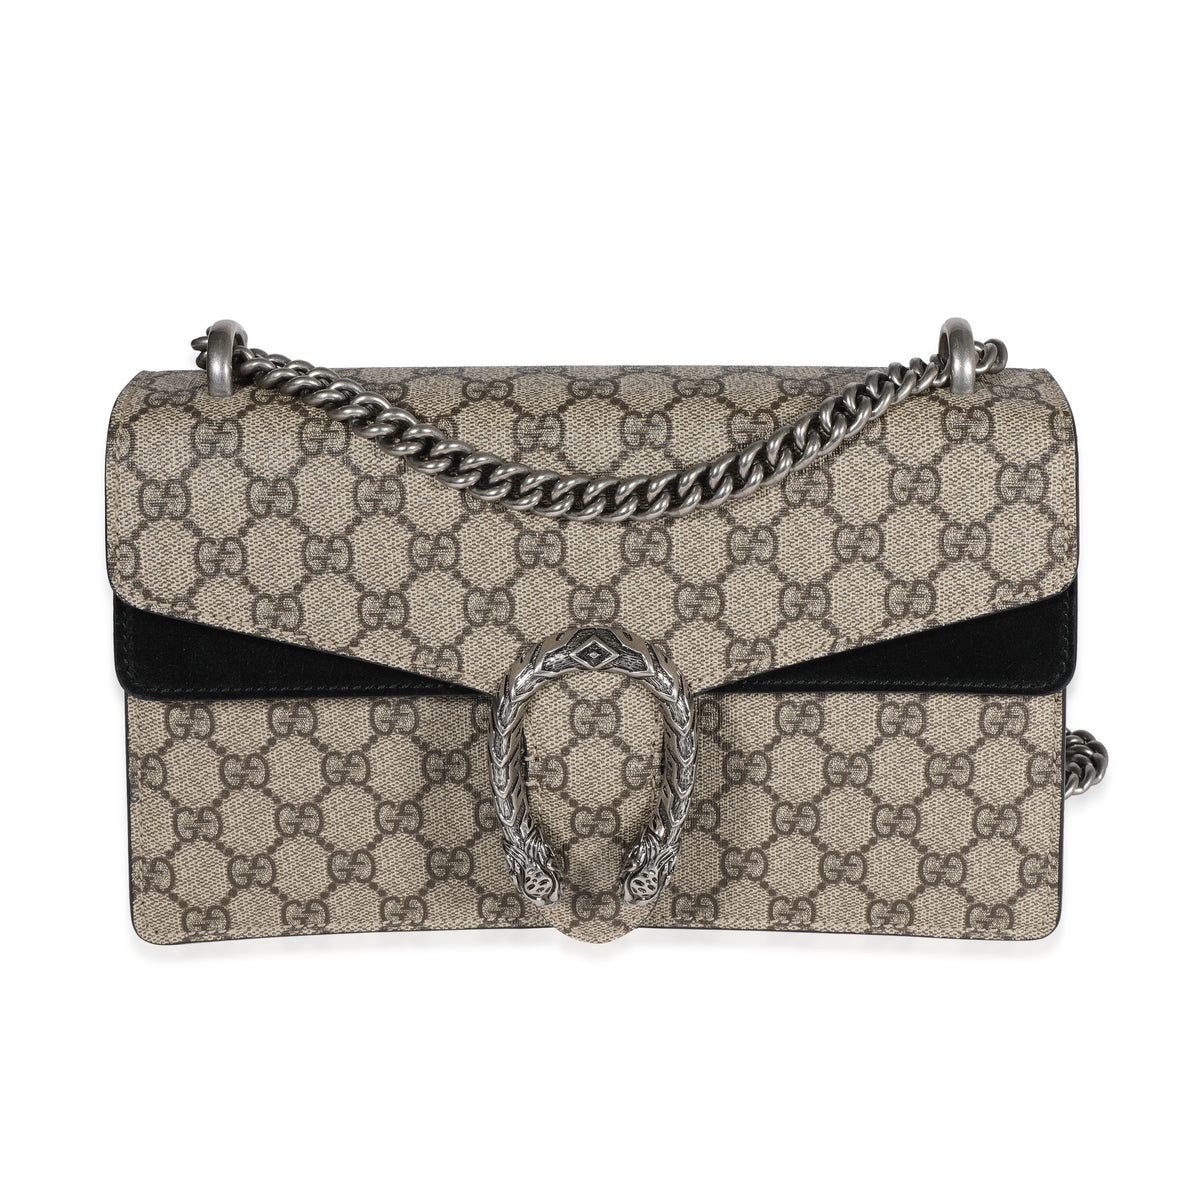 Gucci GG Supreme & Black Suede Small Dionysus Bag